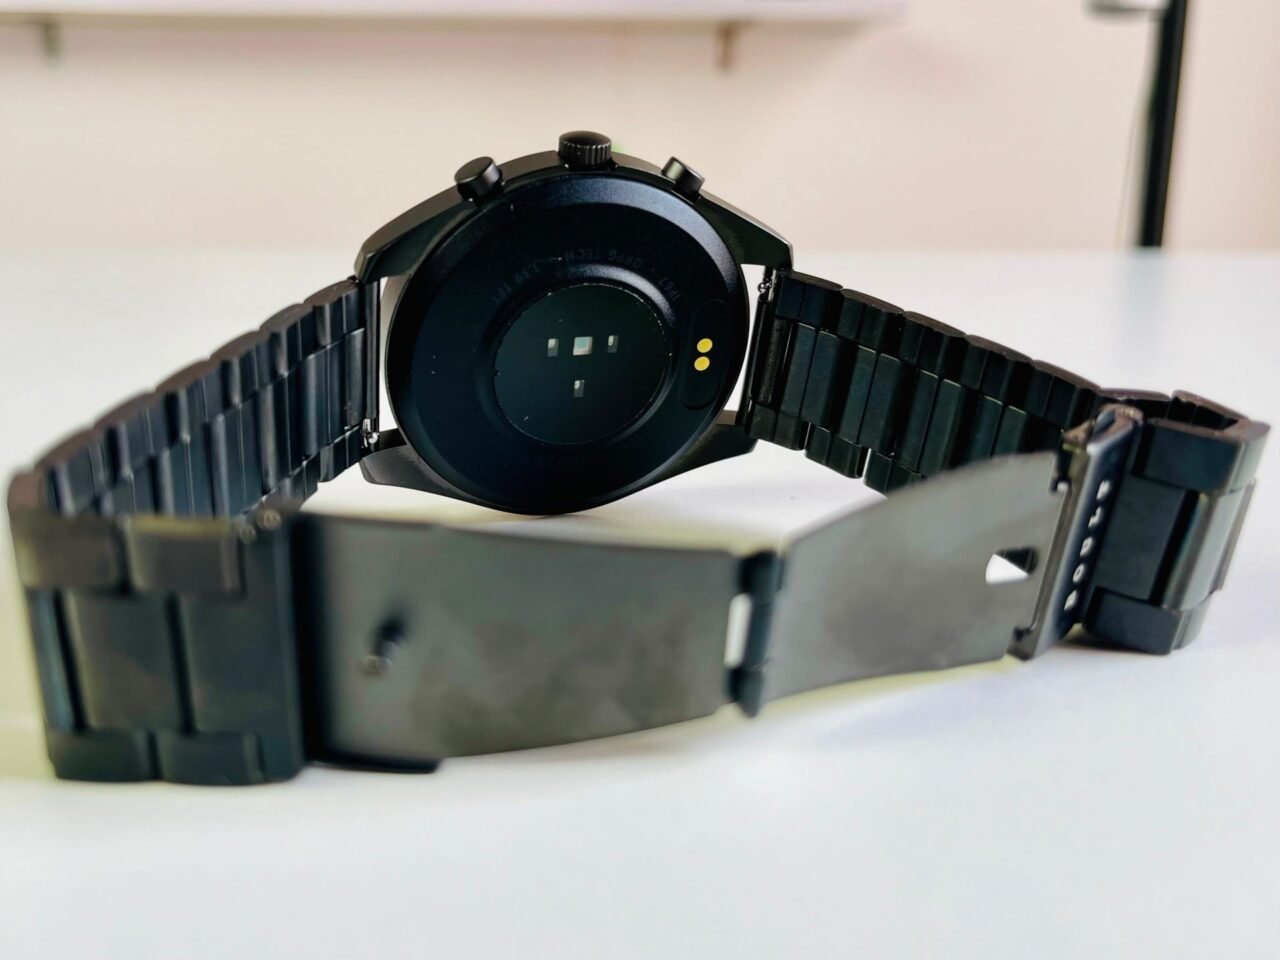 Boult Mirage Smartwatch Review